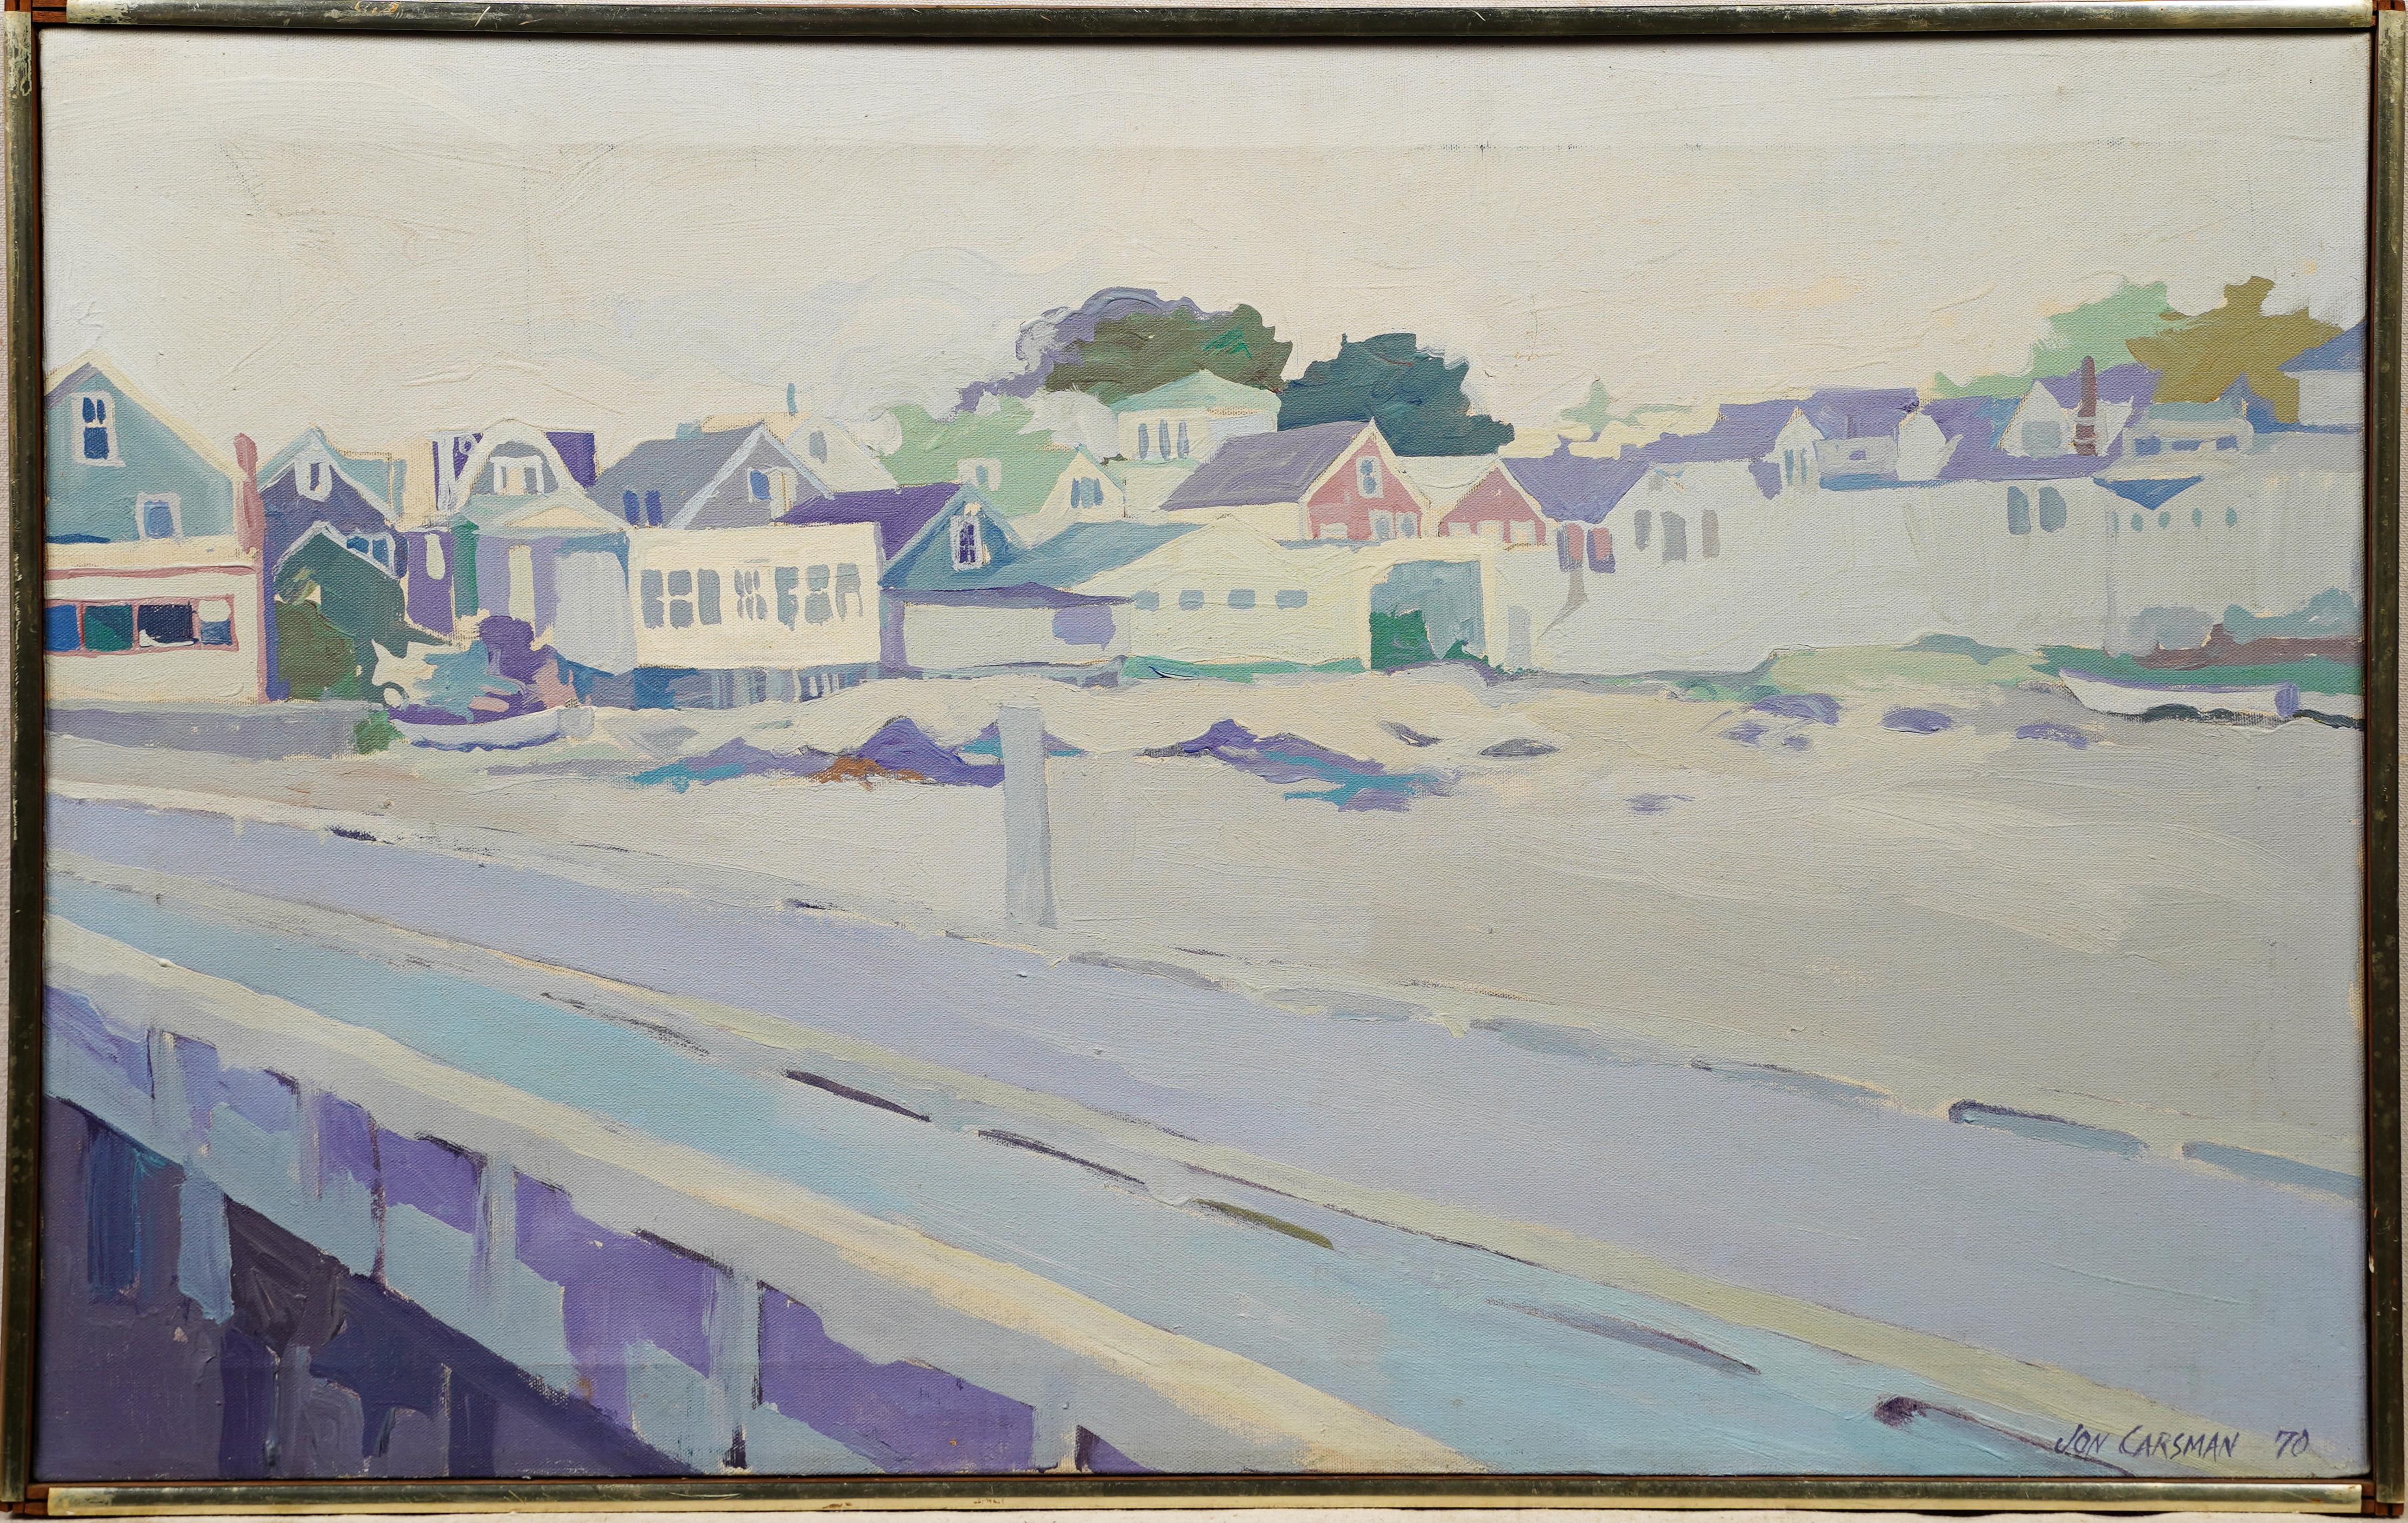  New England Beach Town Fauvist Palette Modernist Gerahmte große Ölgemälde – Painting von Jon Carsman 